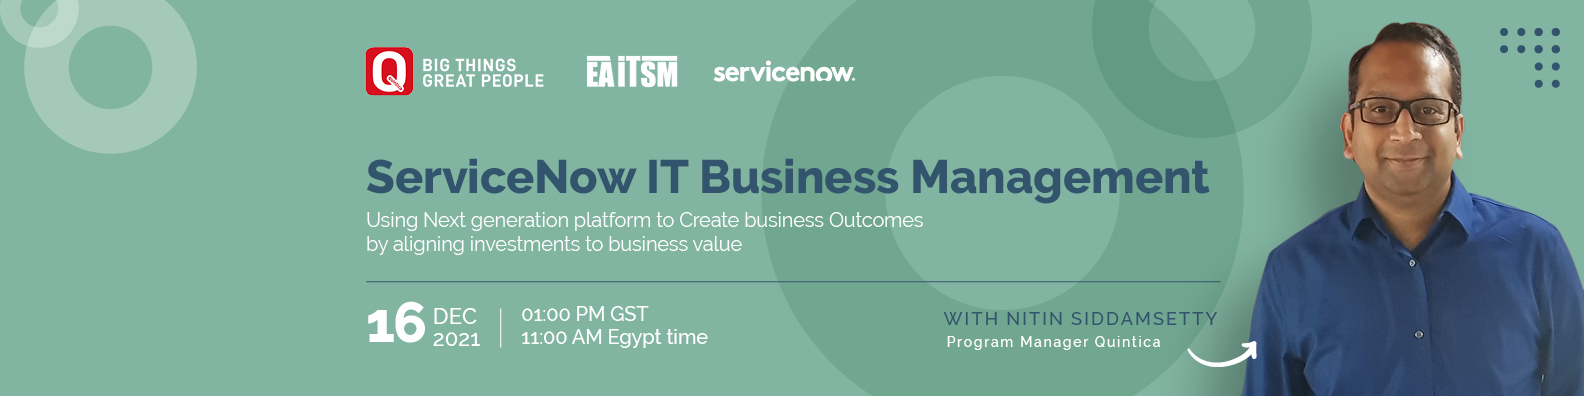 ServiceNow Webinar - ServiceNow IT Business Management